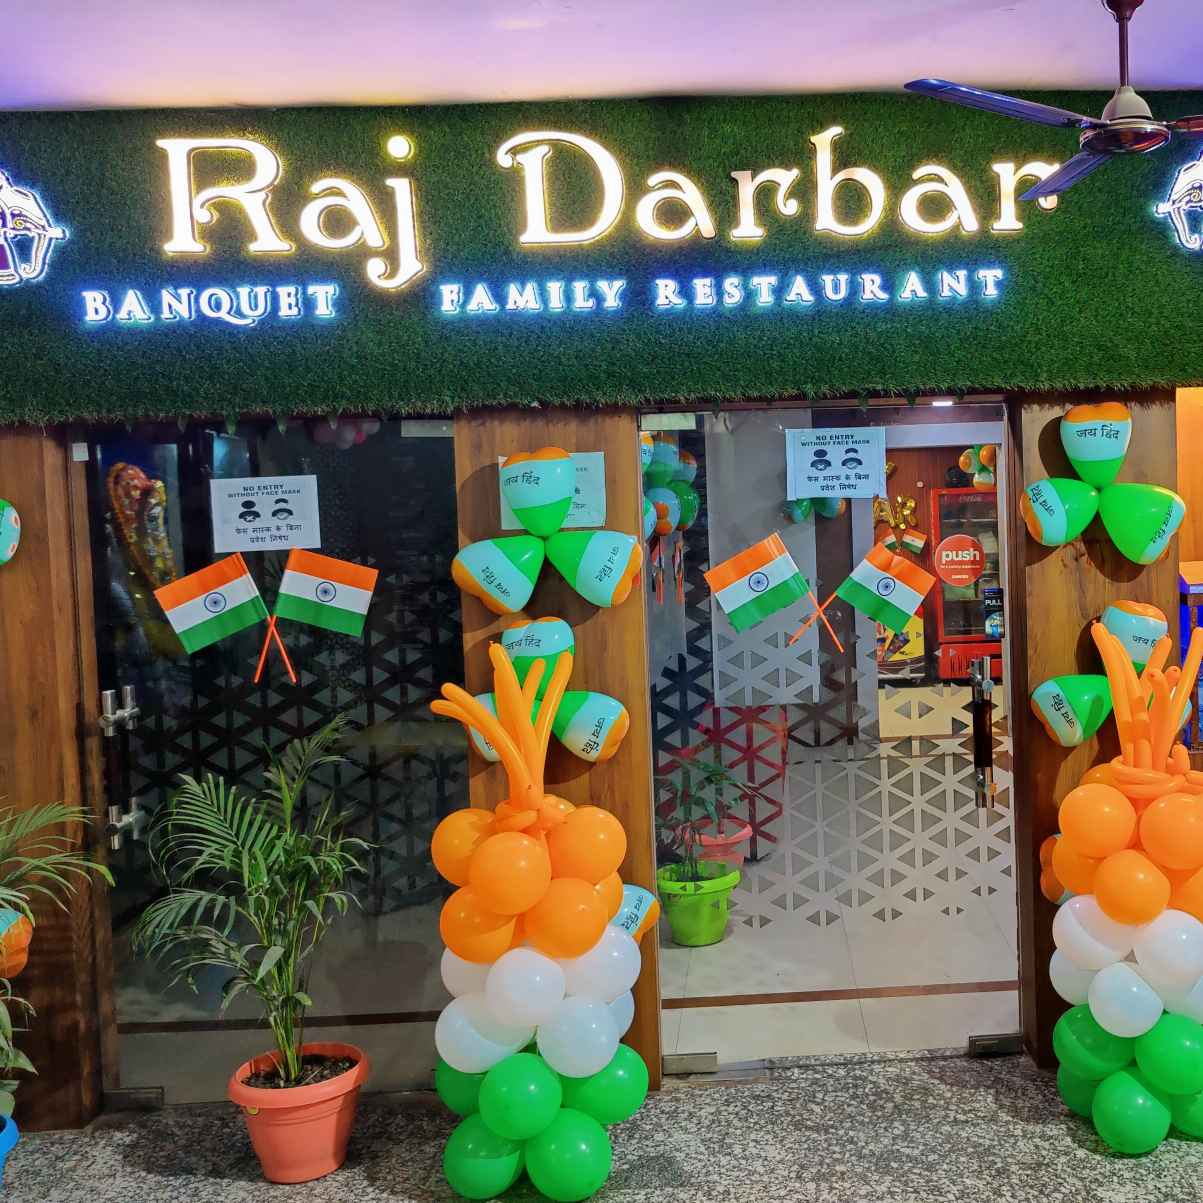 Rajdarbar family Restaurant